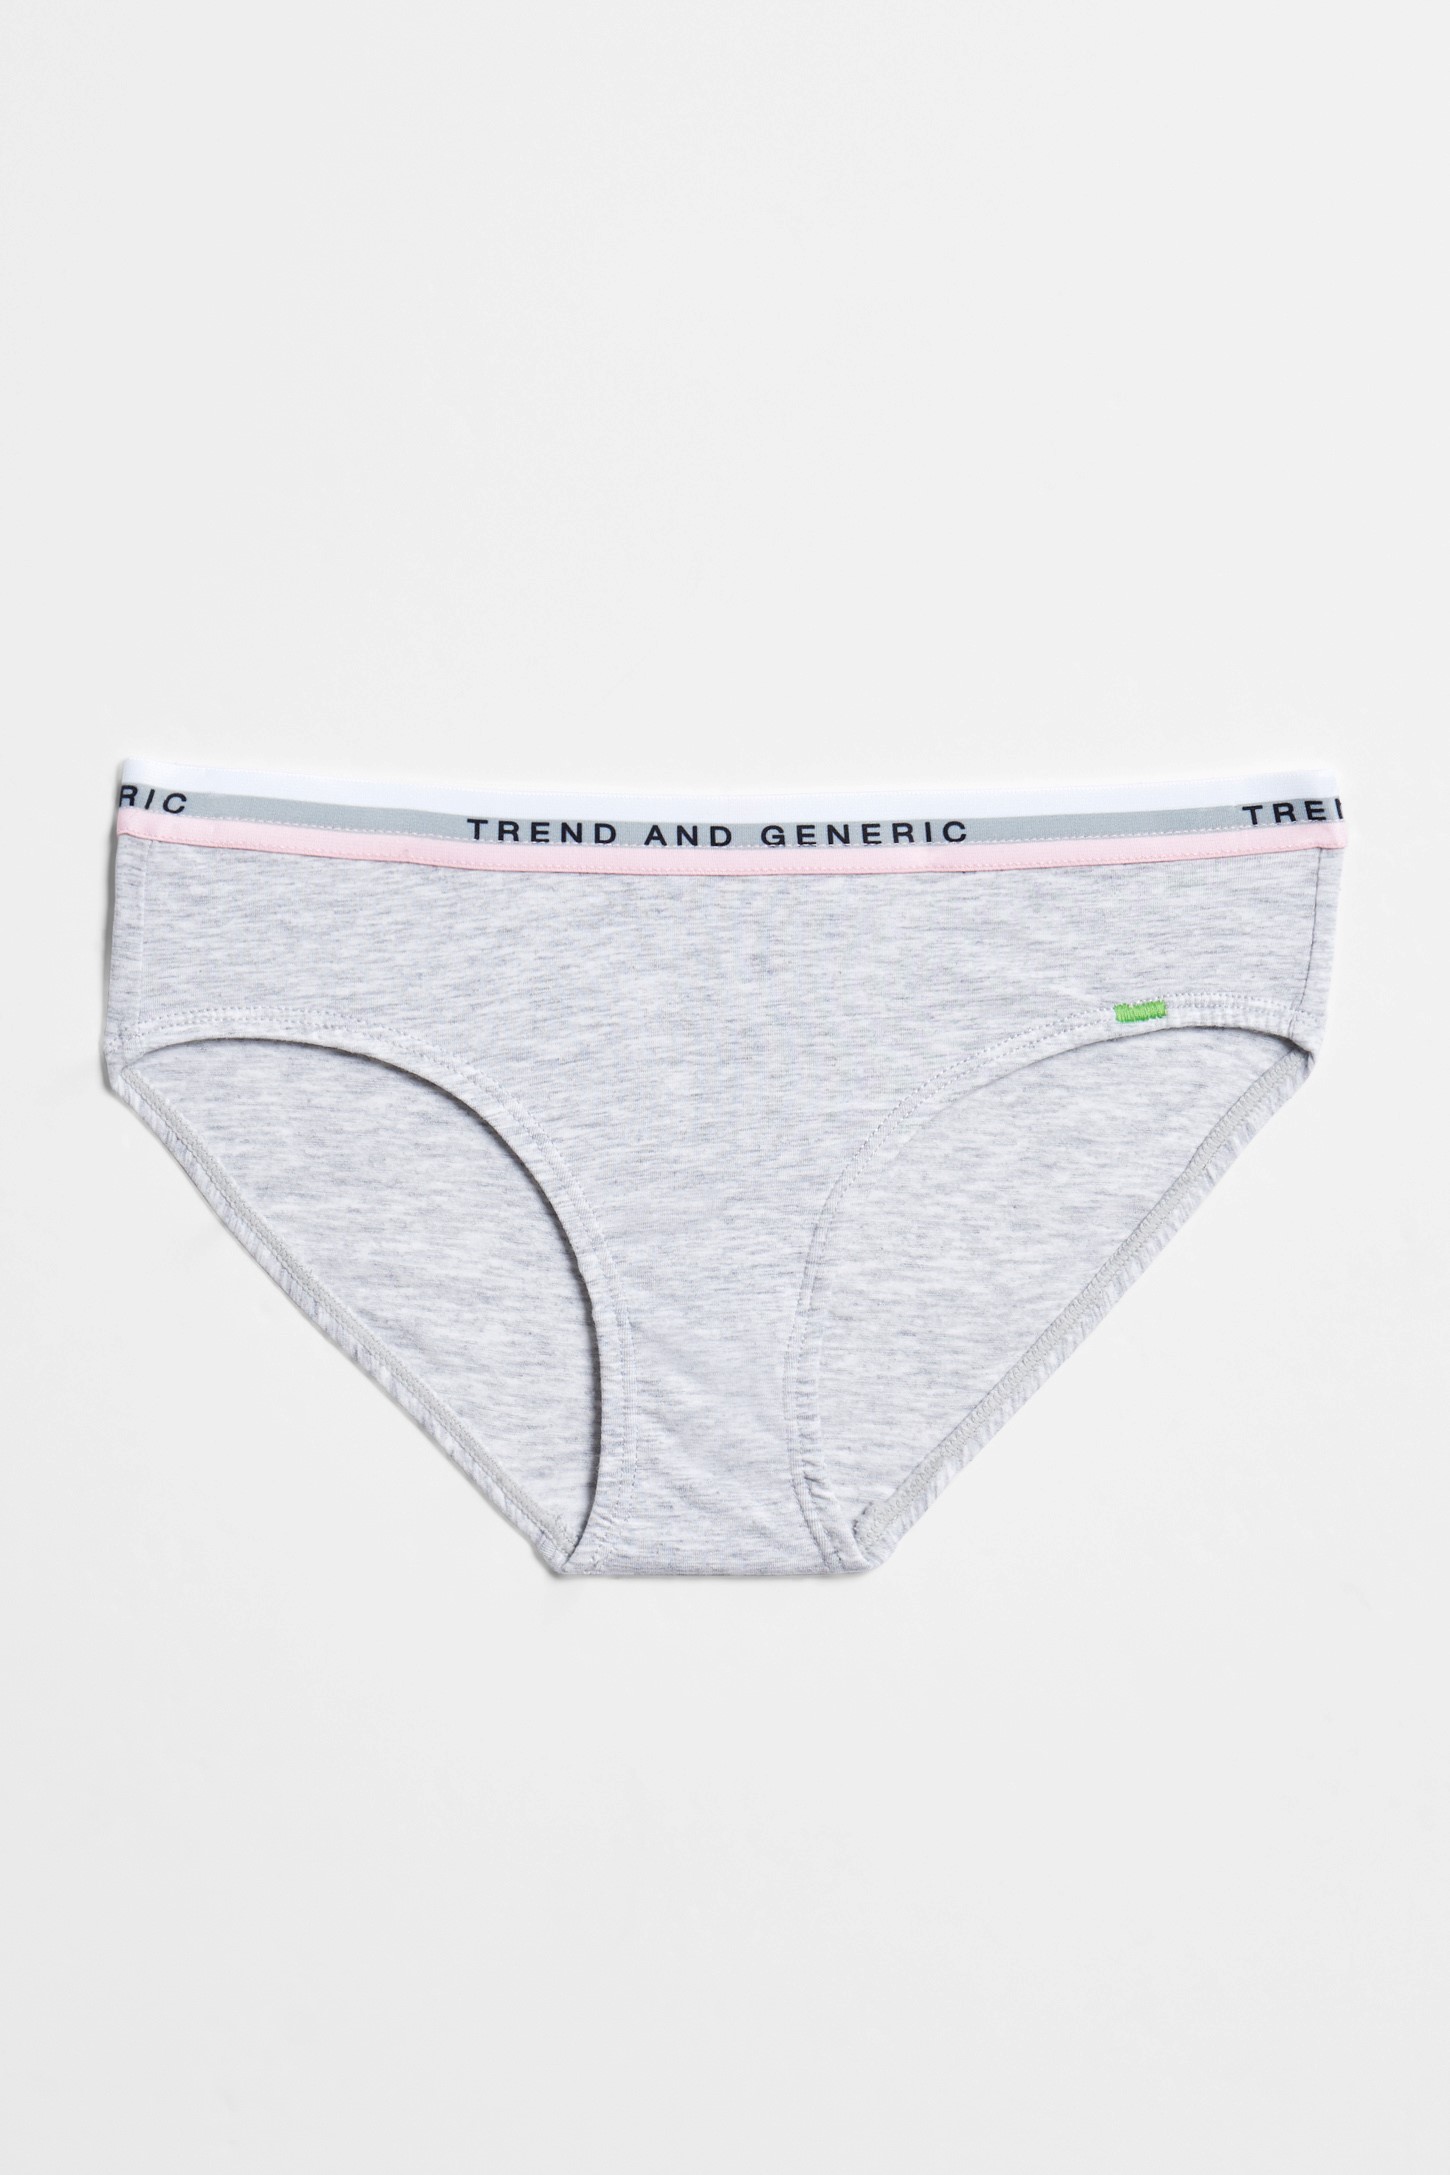 Kidear Womens Cotton Underwear 10-Pack Knickers Girls Mid Rise Briefs Panties 